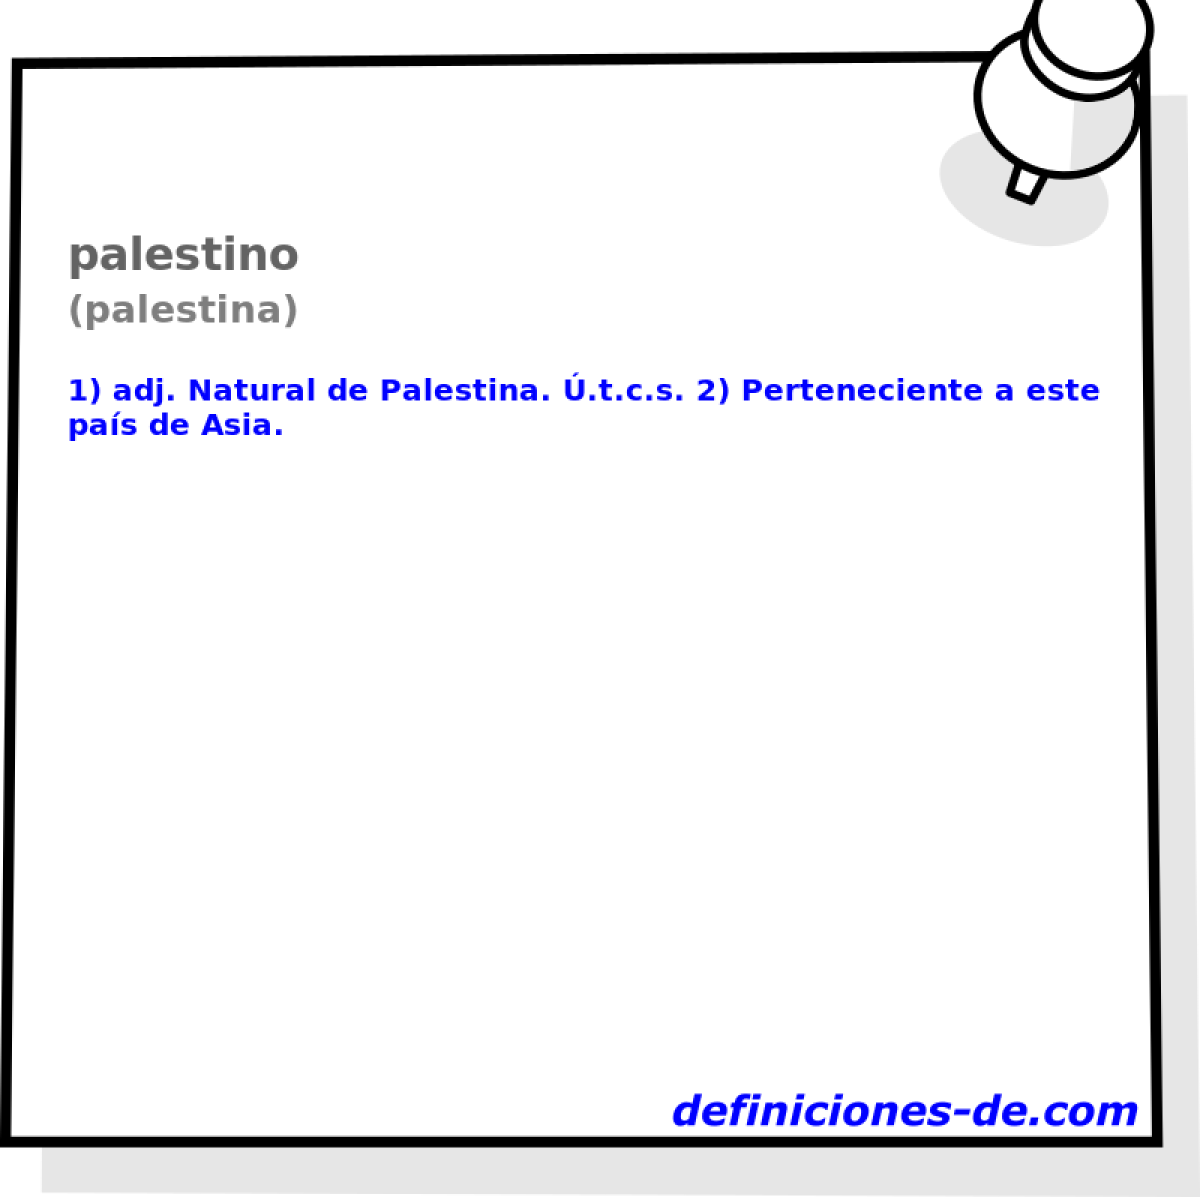 palestino (palestina)